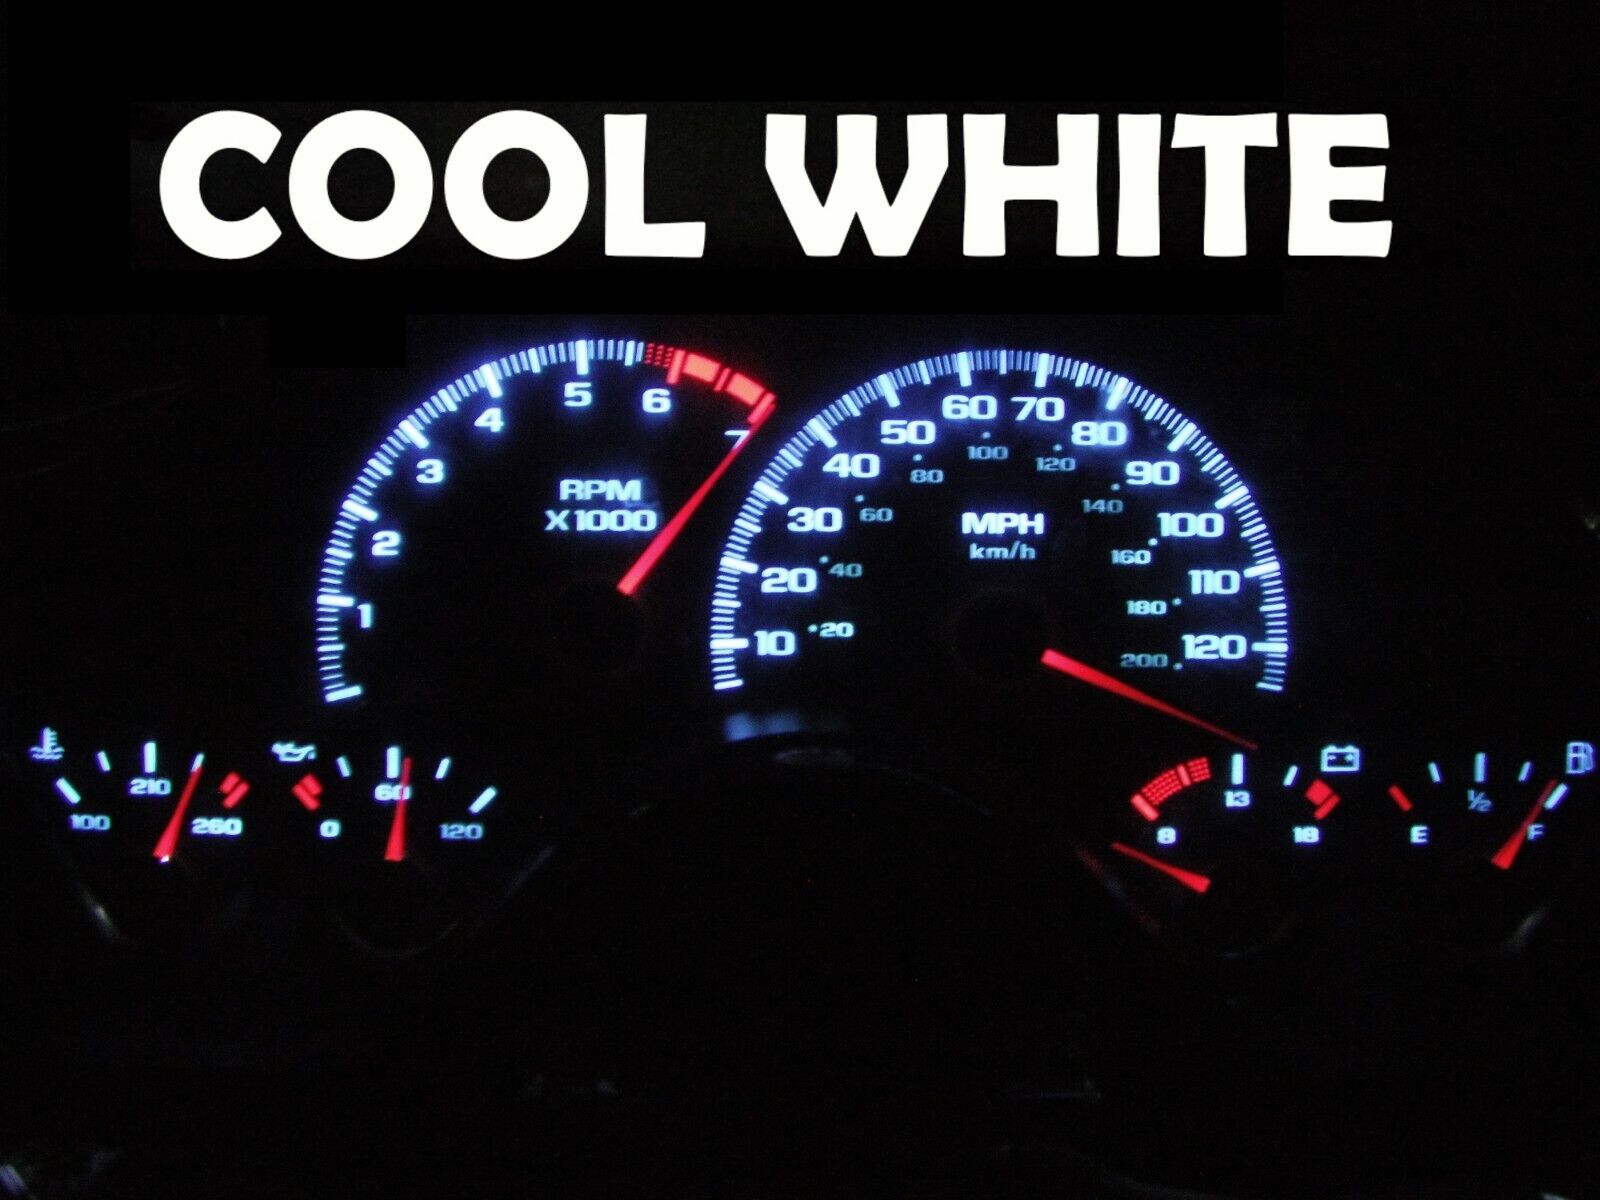 Gauge Cluster LED Dash kit Cool White For 97 02 Chevy Camaro Chevrolet SS Z28